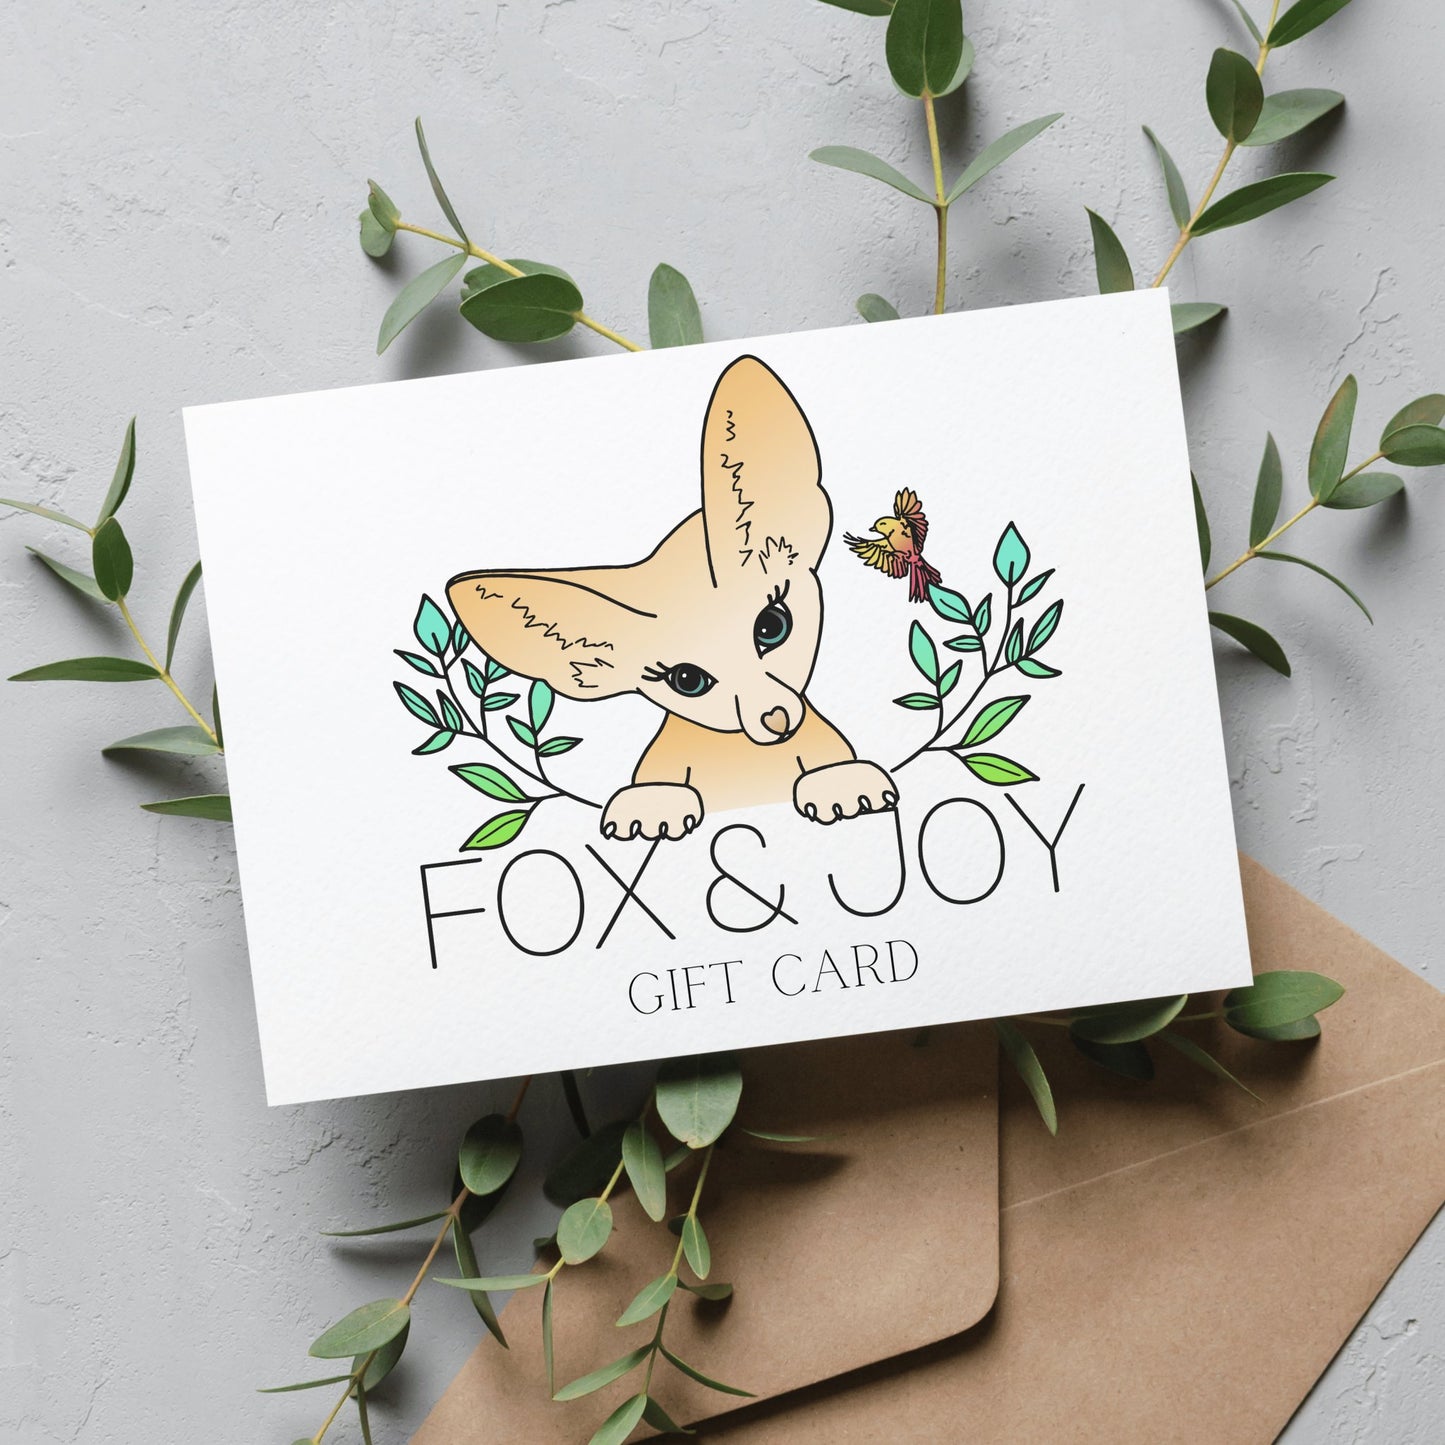 Fox & Joy Gift Card - Fox & Joy